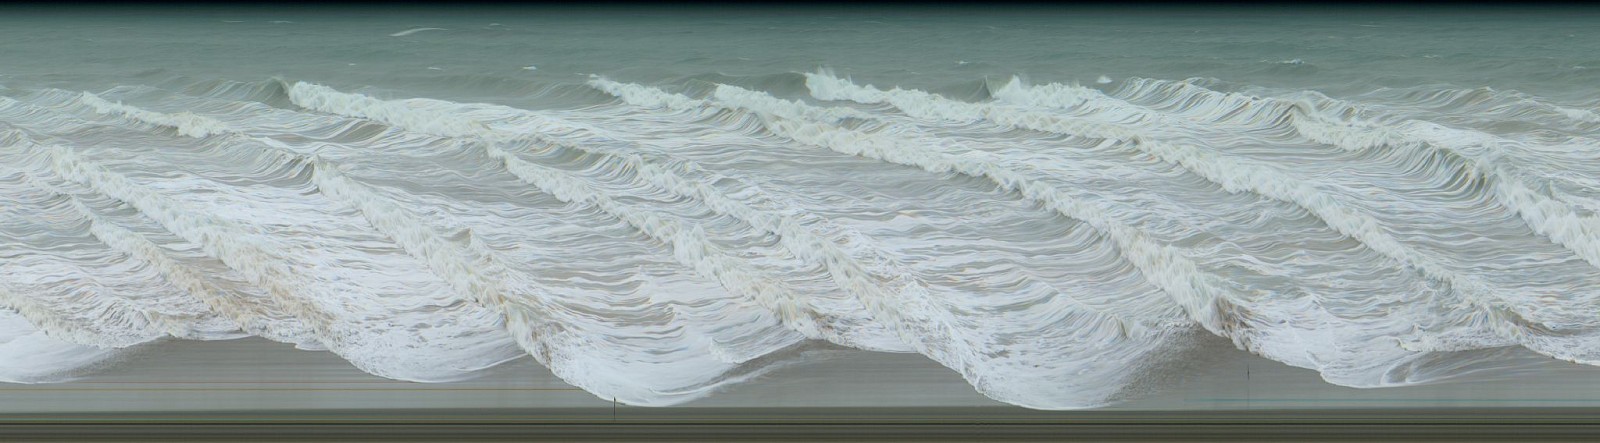 Jay Mark Johnson, STORM AT SEA #8B, 2010 Malibu - Ventura CA
archival pigment on paper, mounted on aluminum, 40 x 144 in. (101.6 x 365.8 cm)